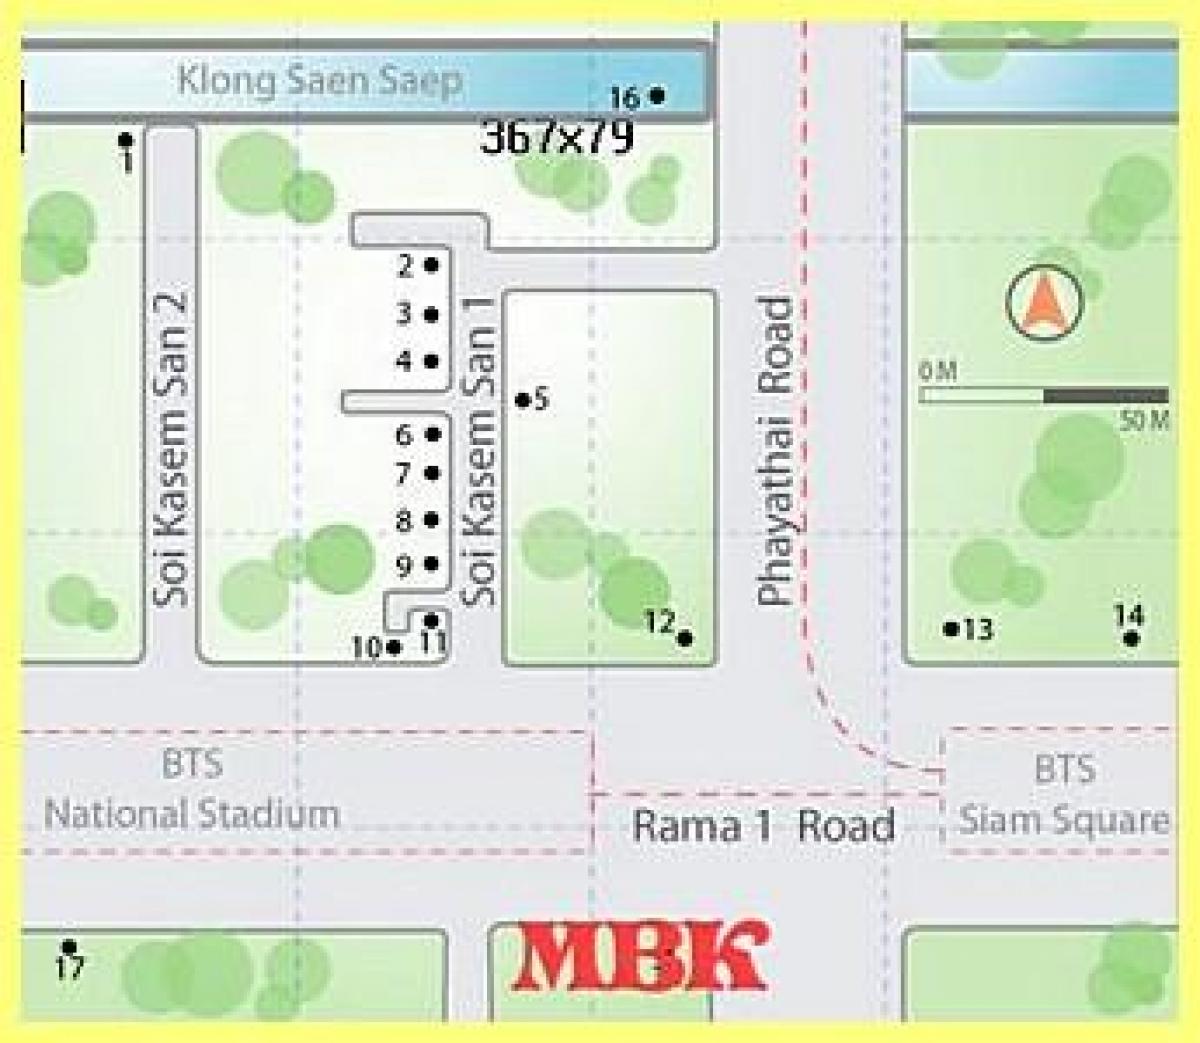 mbk شاپنگ مال میں بینکاک نقشہ